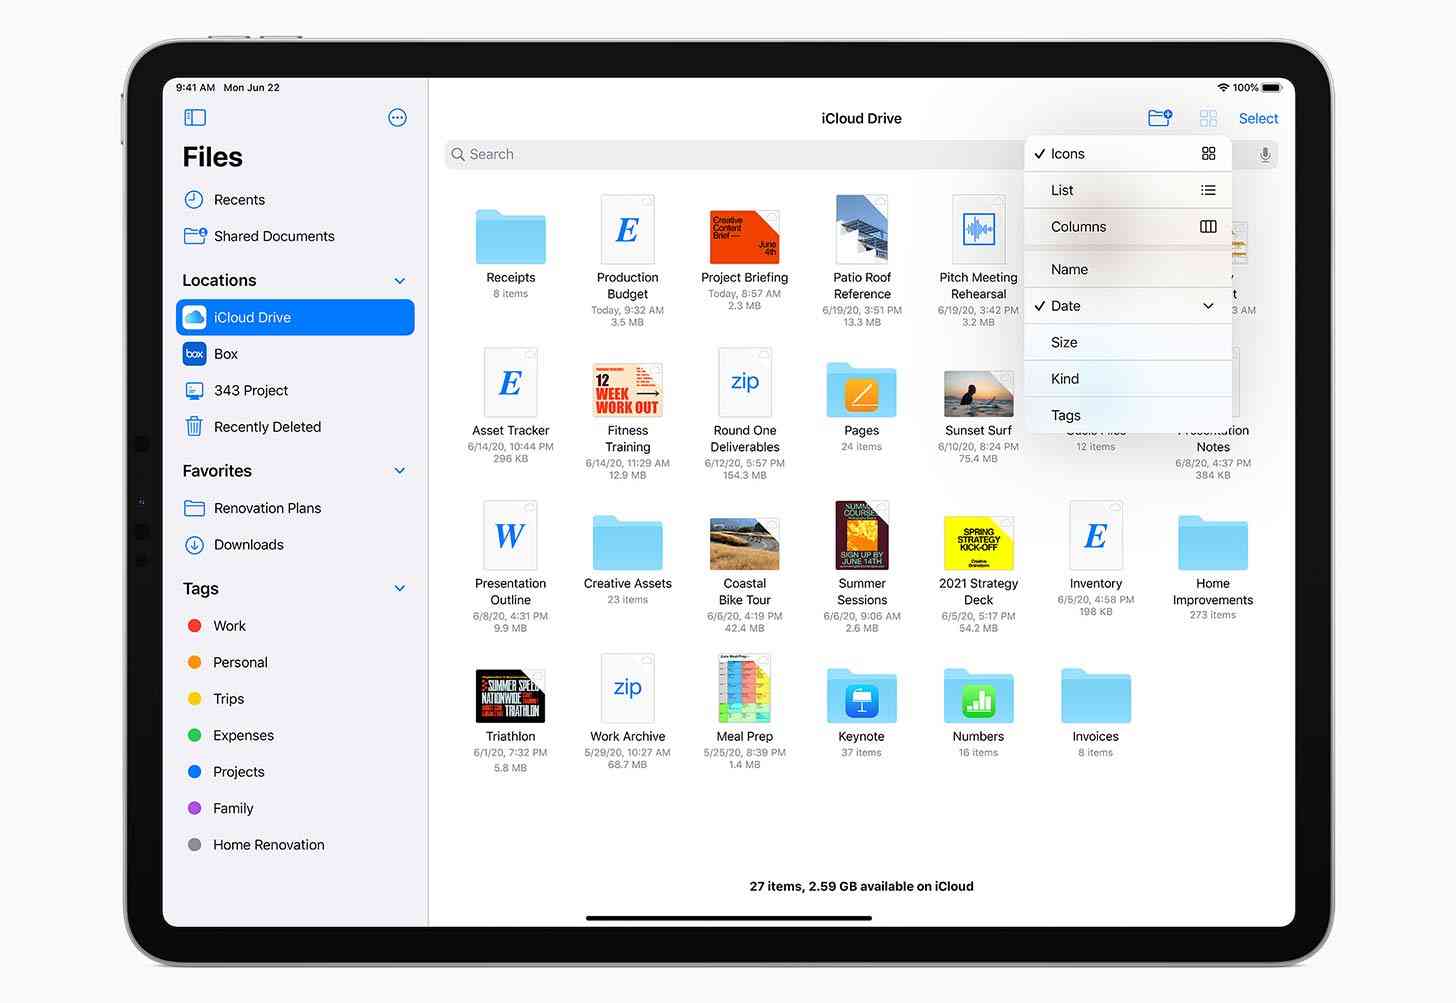 iPadOS 14 redesigned sidebars, toolbars